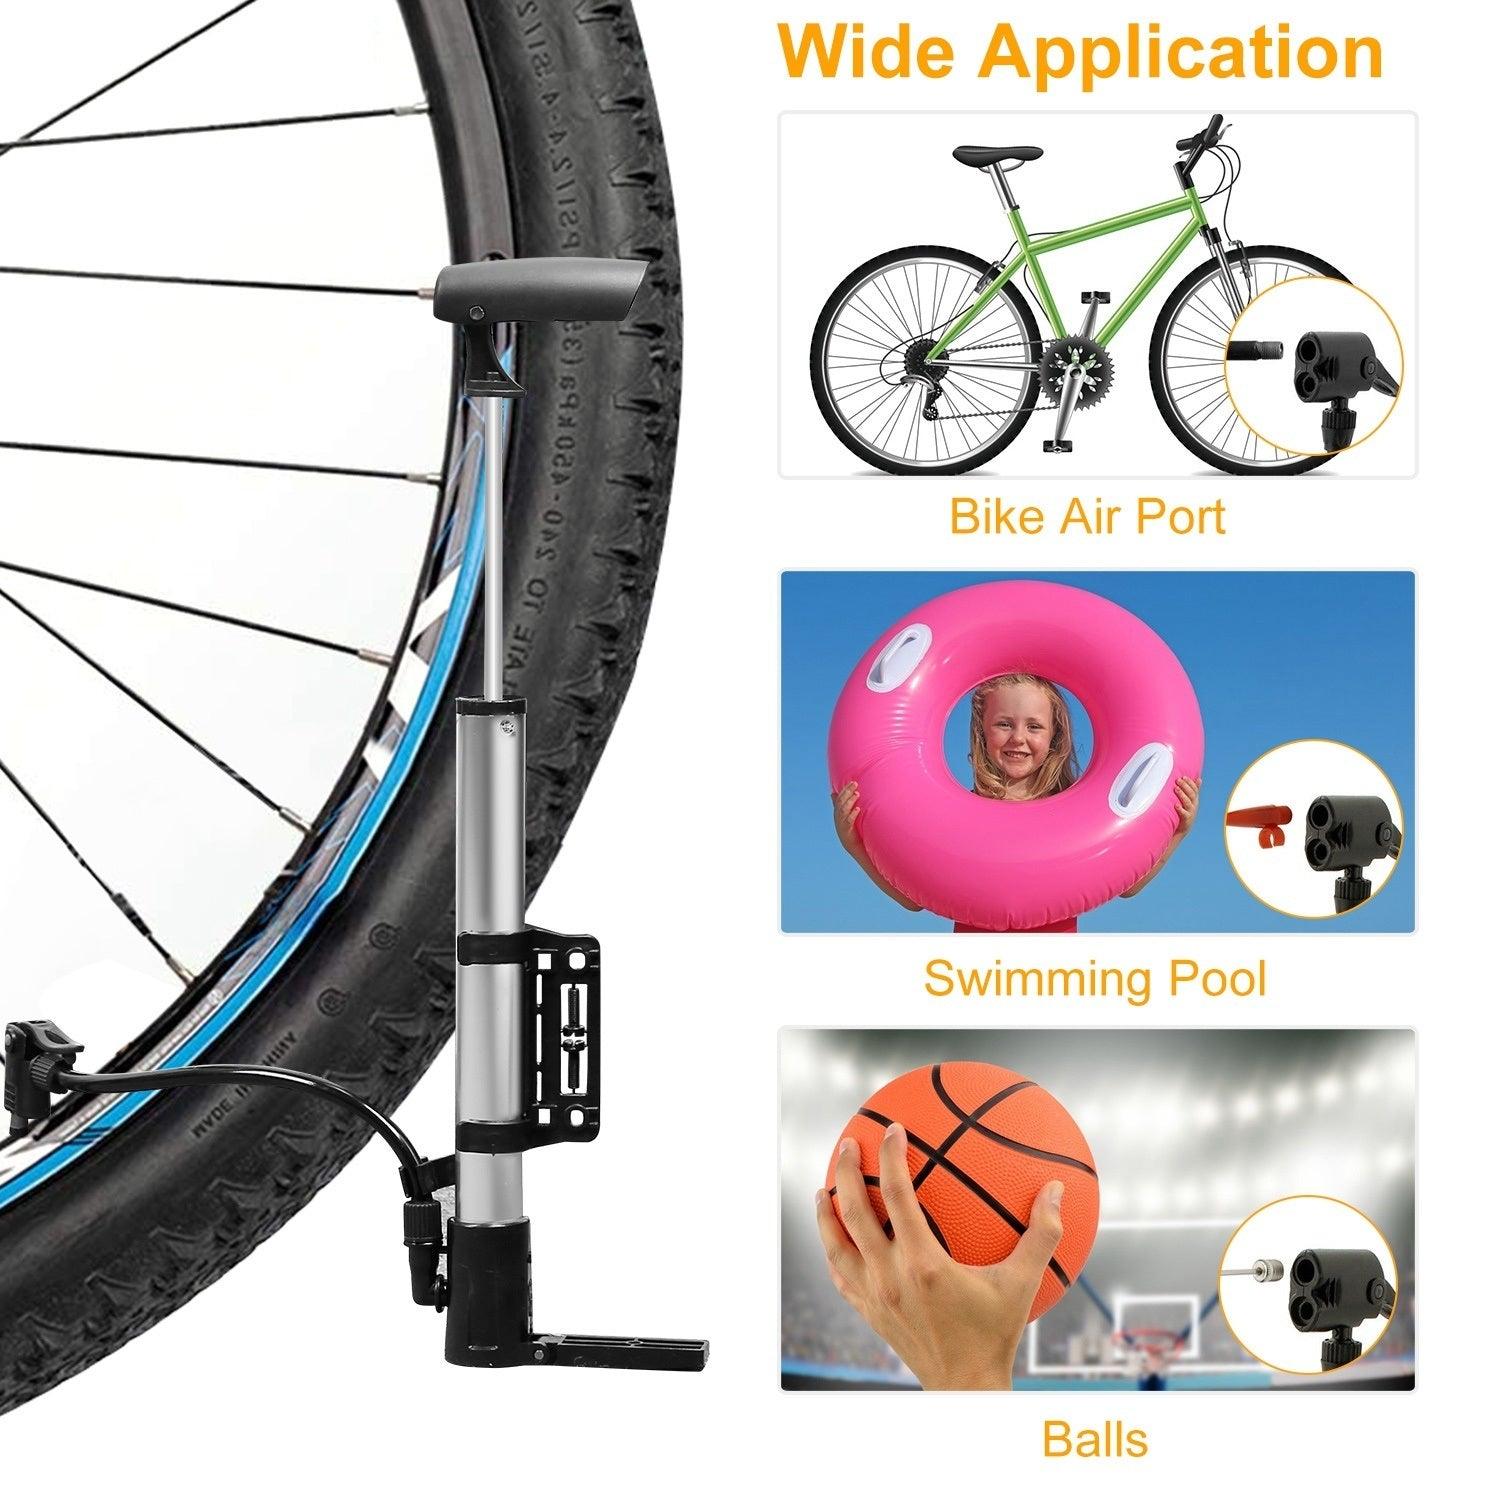 Mini Bike Pump Portable Bicycle Tire Inflator Ball Air Pump w/ Mount Frame For Mountain Road Bike - Lazy Pro